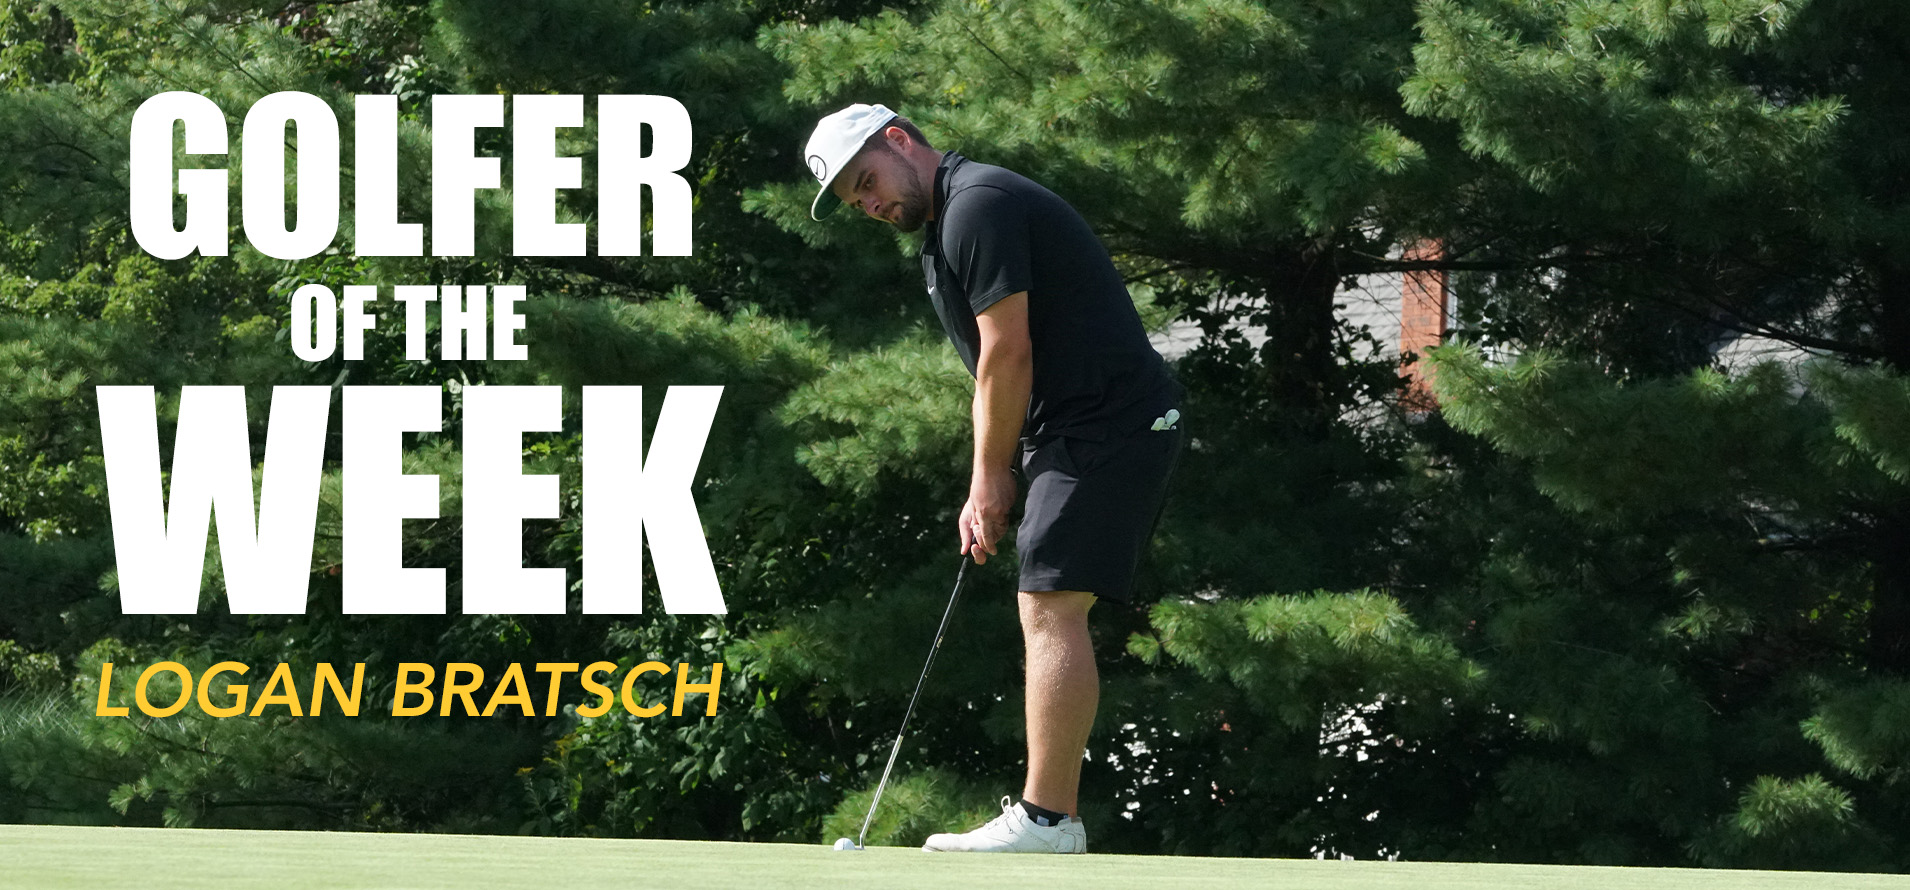 Bratsch Receives Second Career OAC Men’s Golfer of the Week Accolade